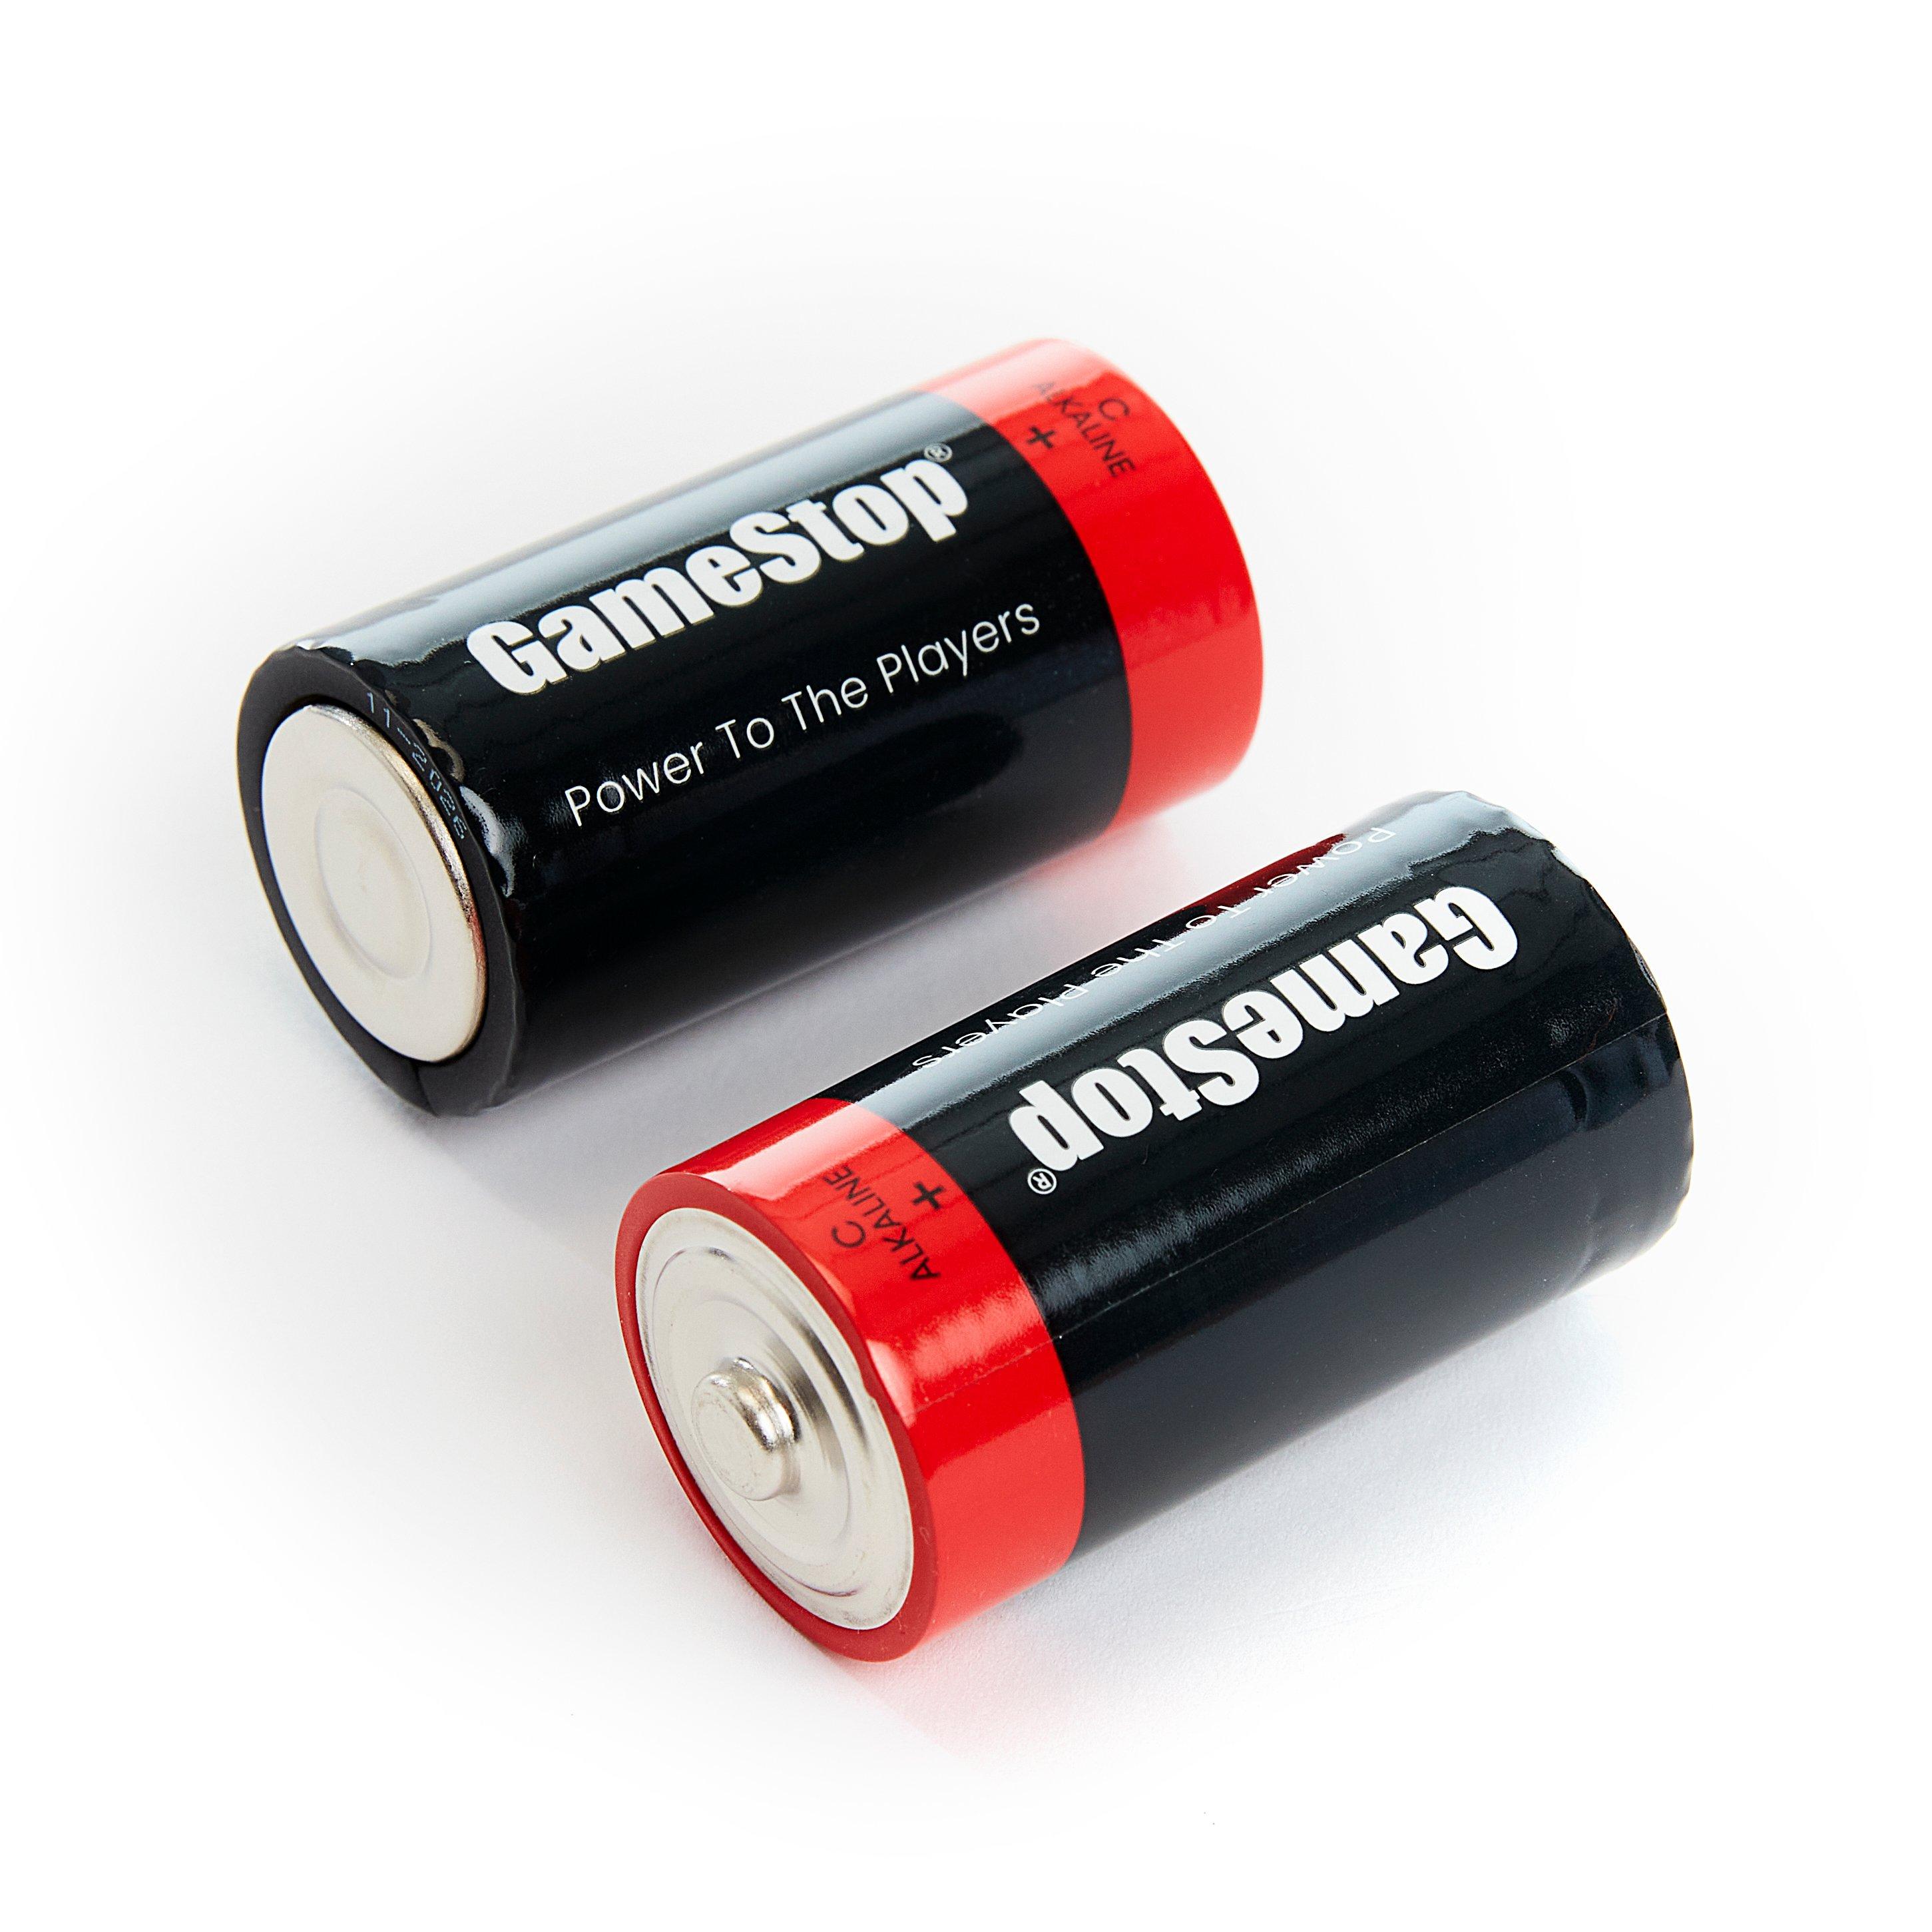 GameStop C Alkaline Batteries 2 Pack